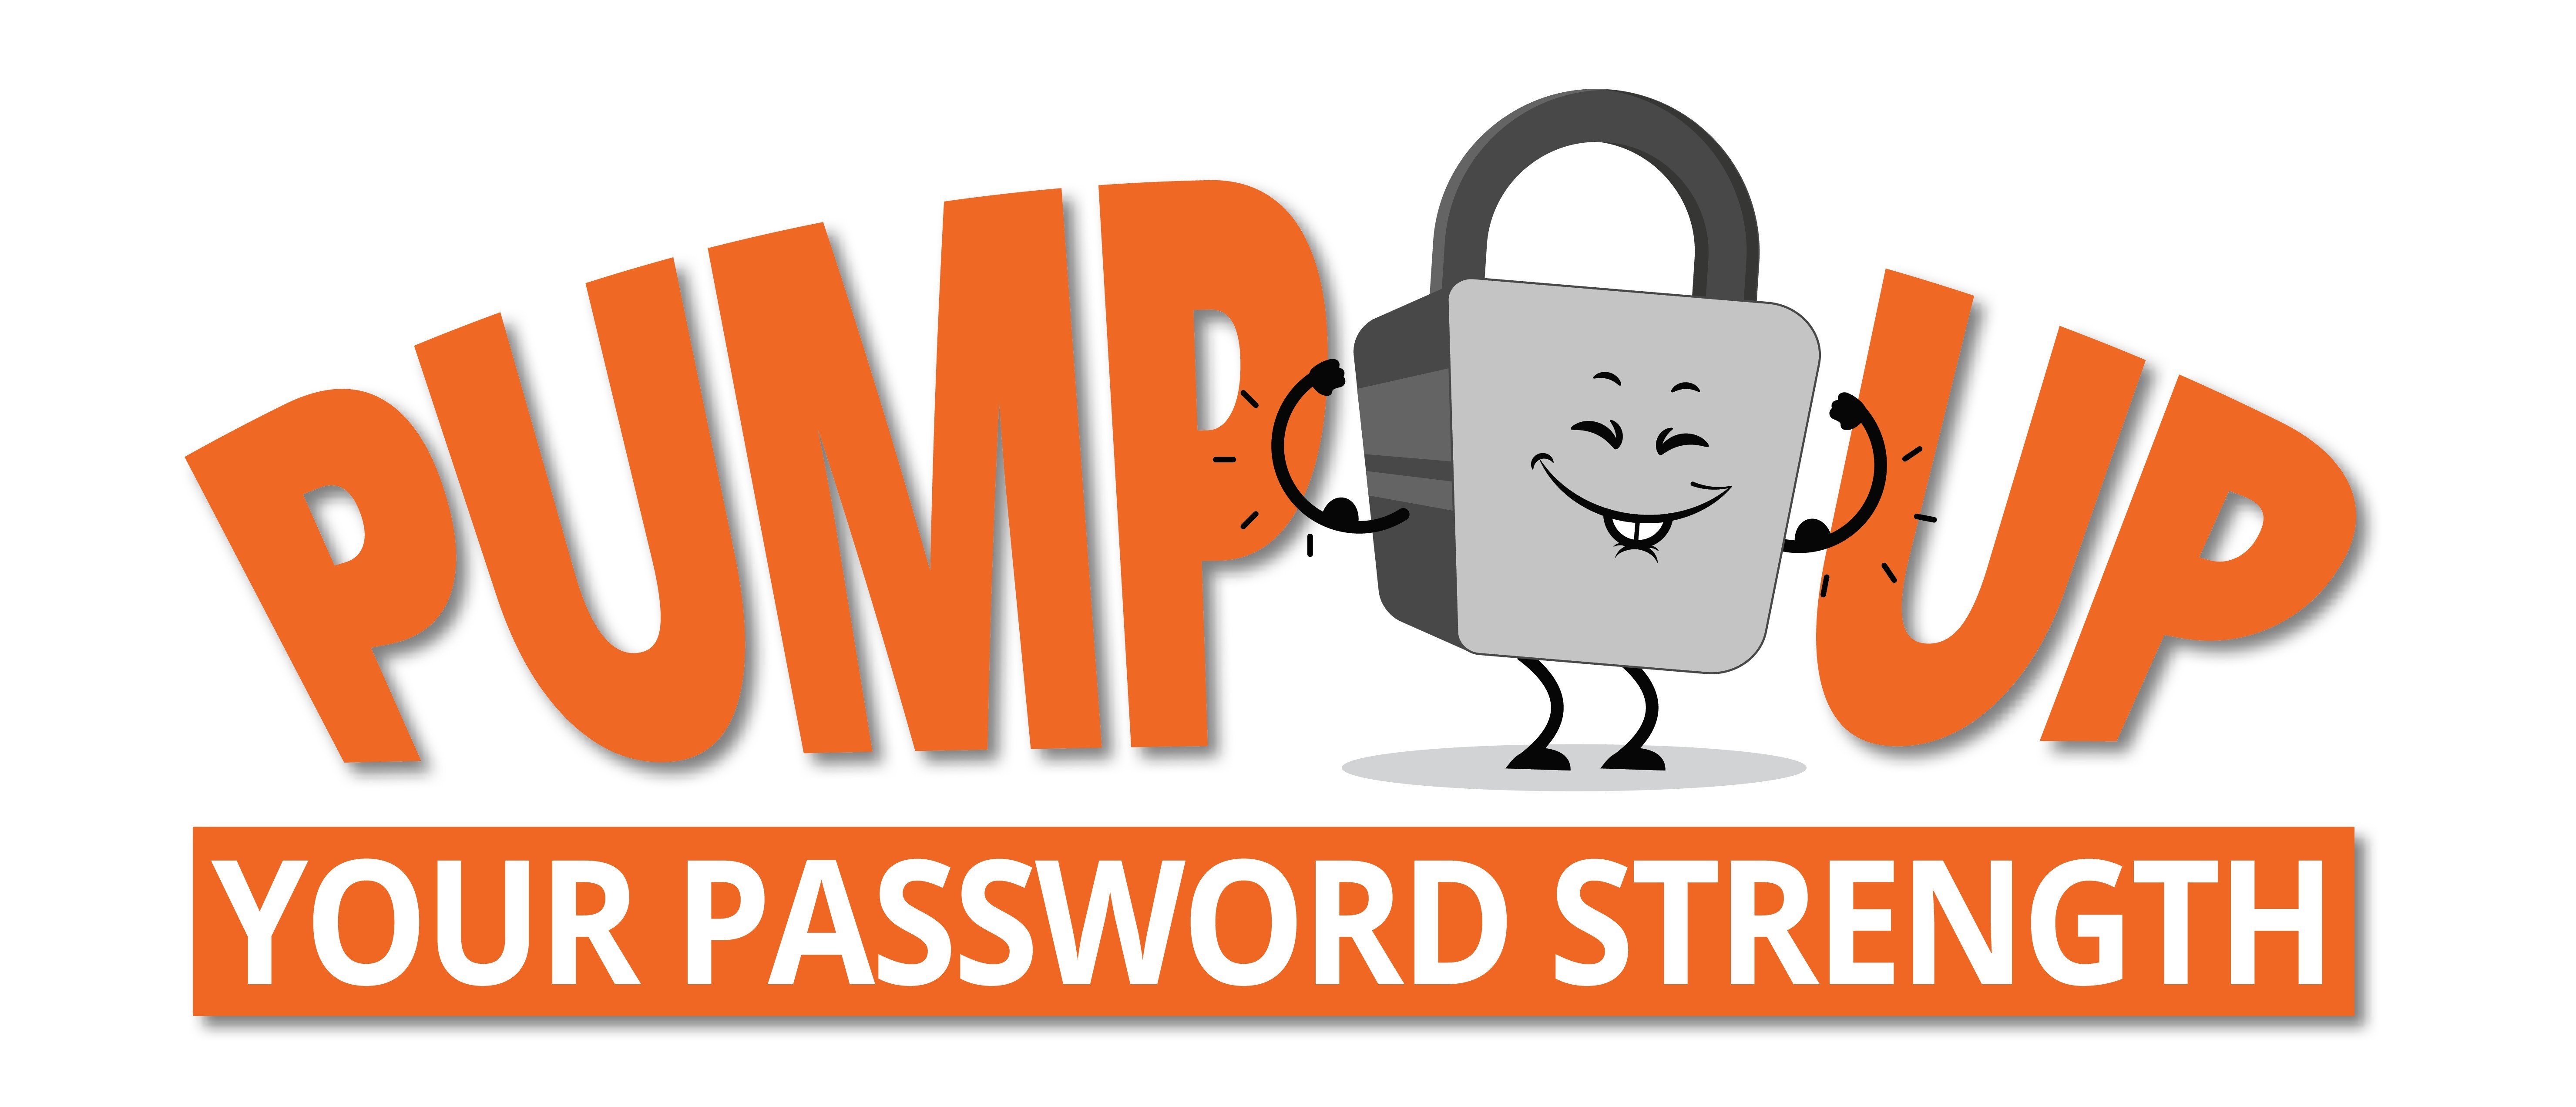 Pump up your password strength.